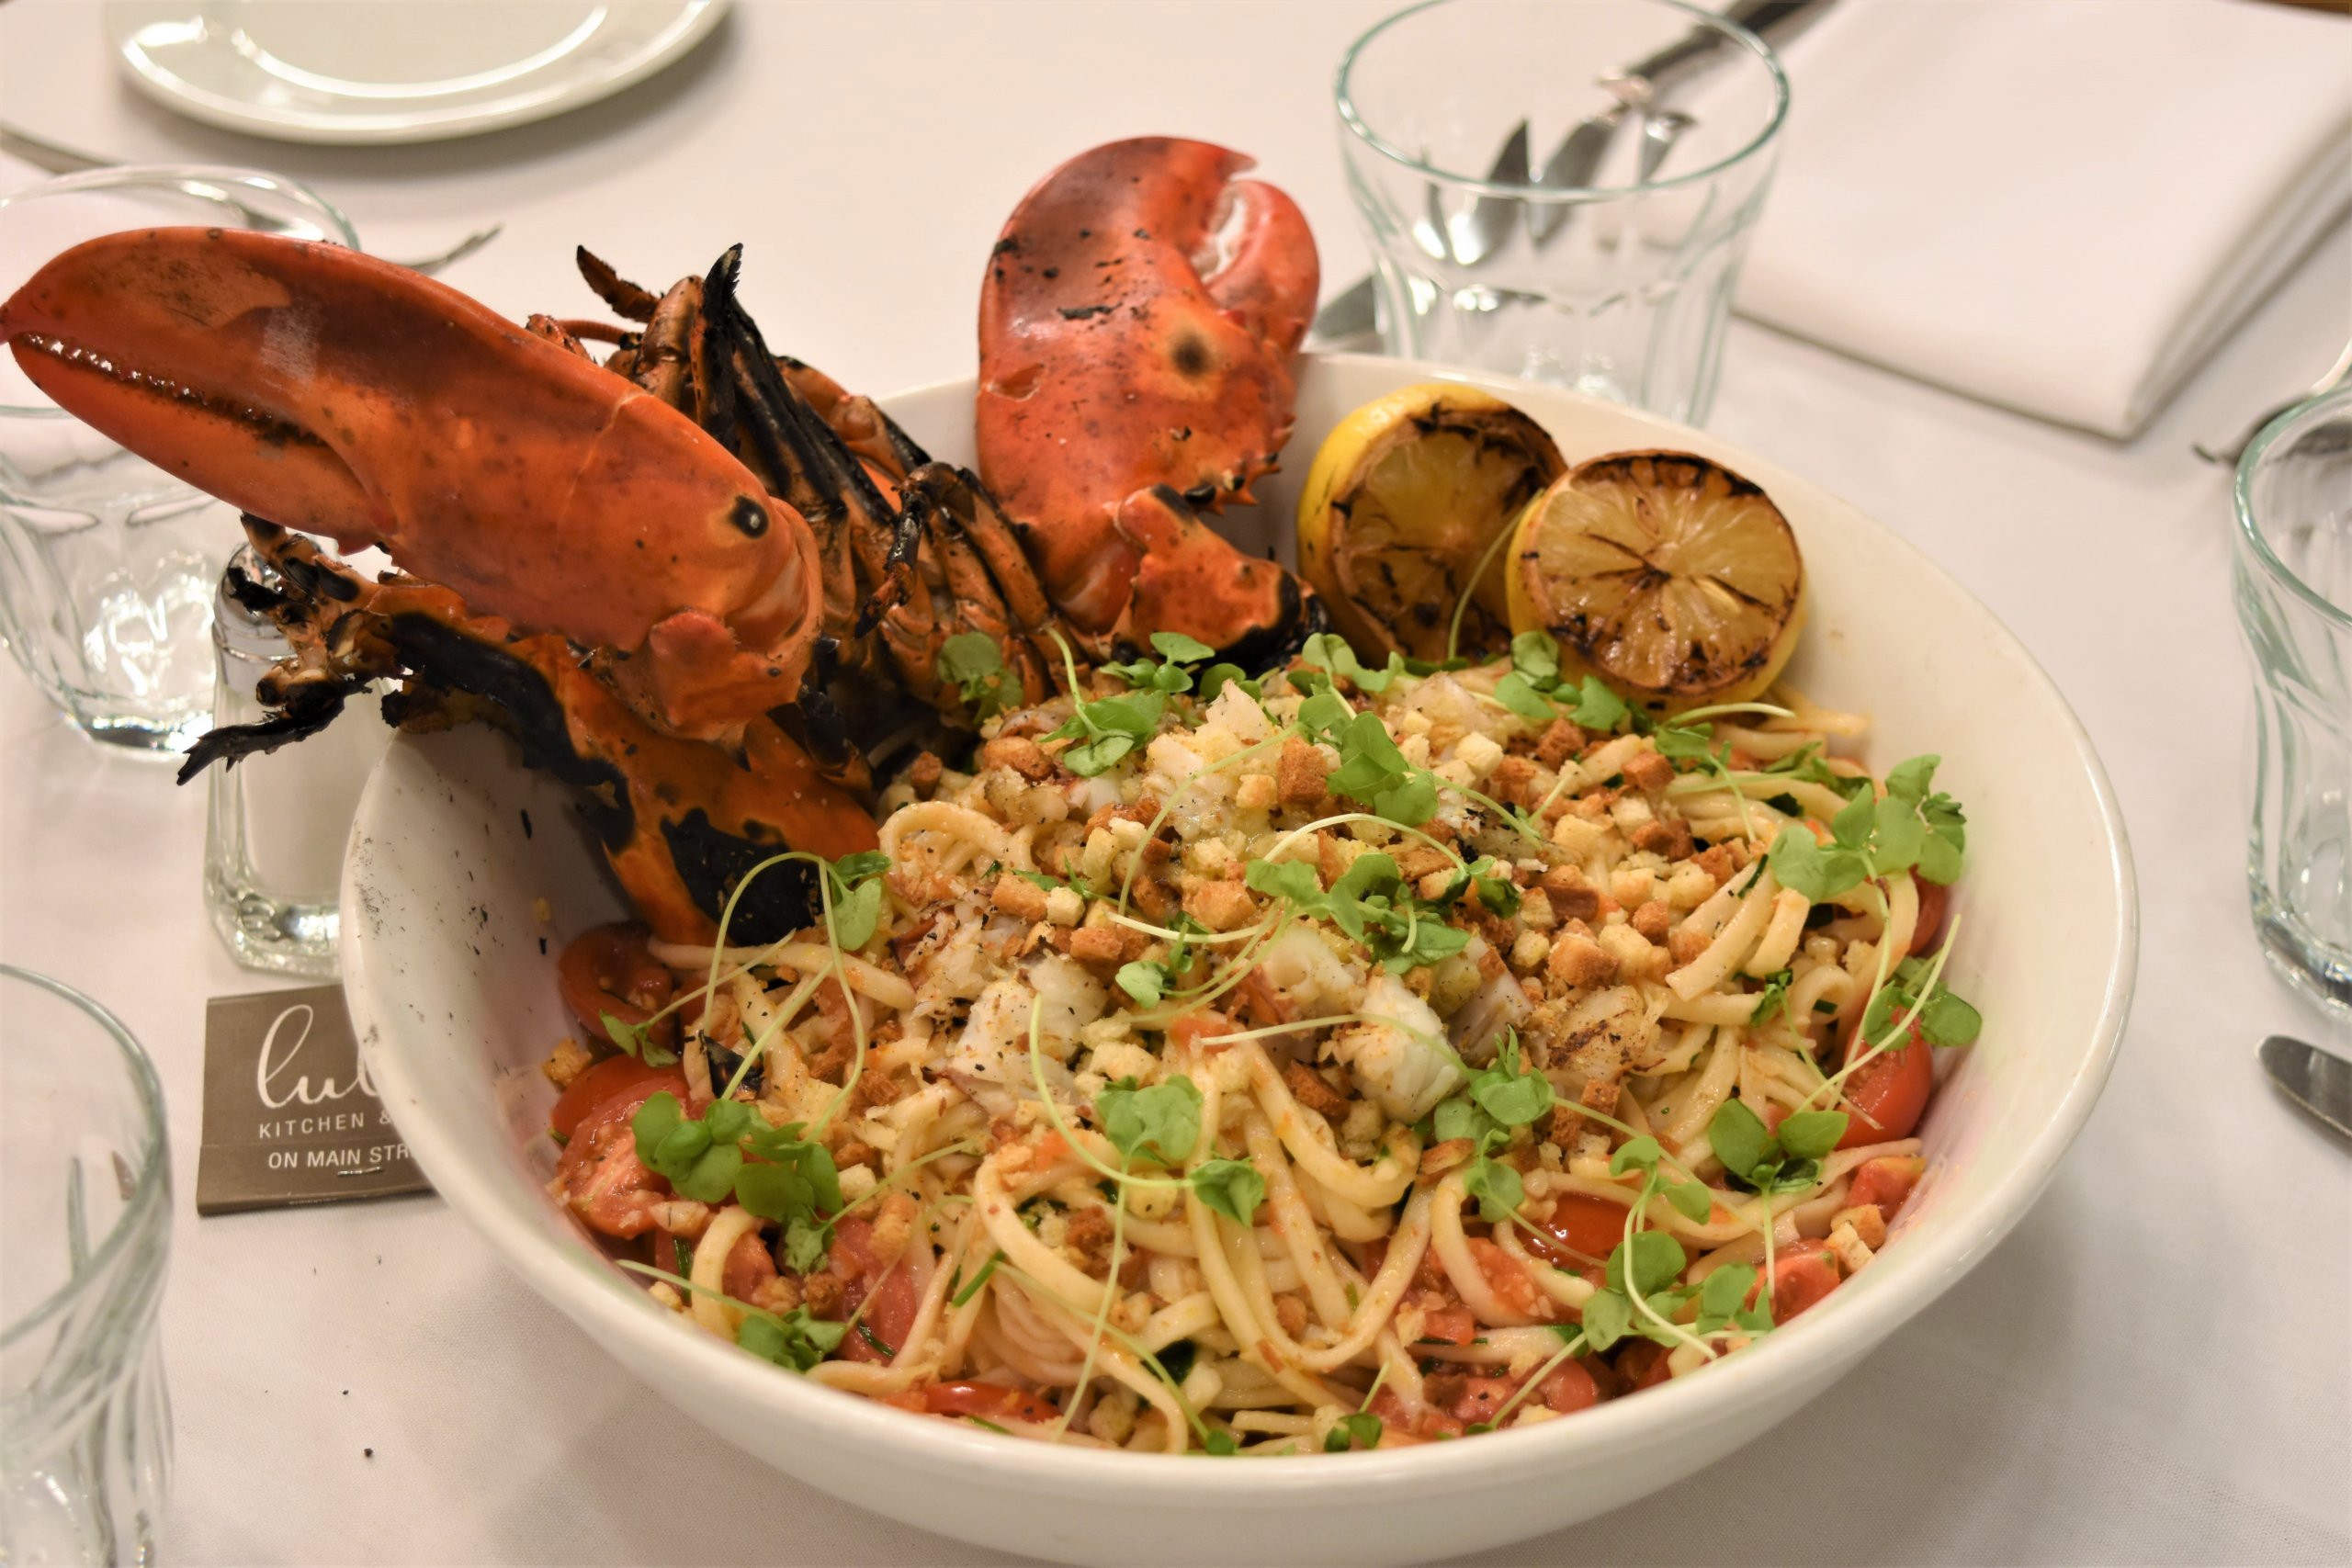 The lobster pasta at Lulu Kitchen & Bar in Sag Harbor.